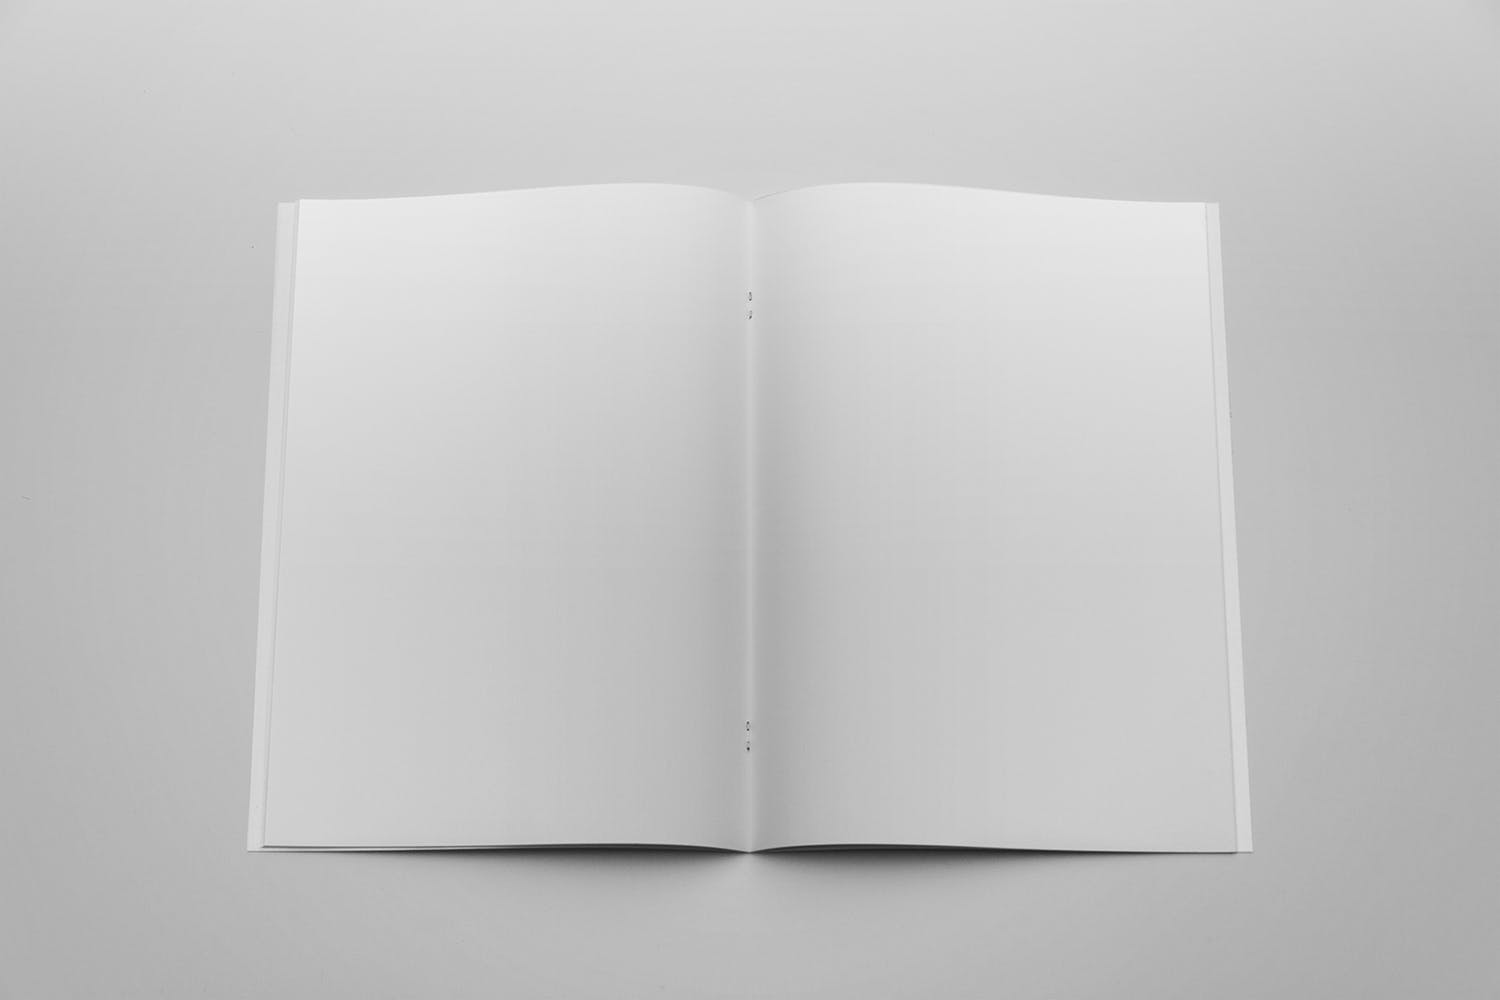 A4宣传小册子/企业画册内页设计顶视图样机第一素材精选 A4 Brochure Mockup Top View插图(1)